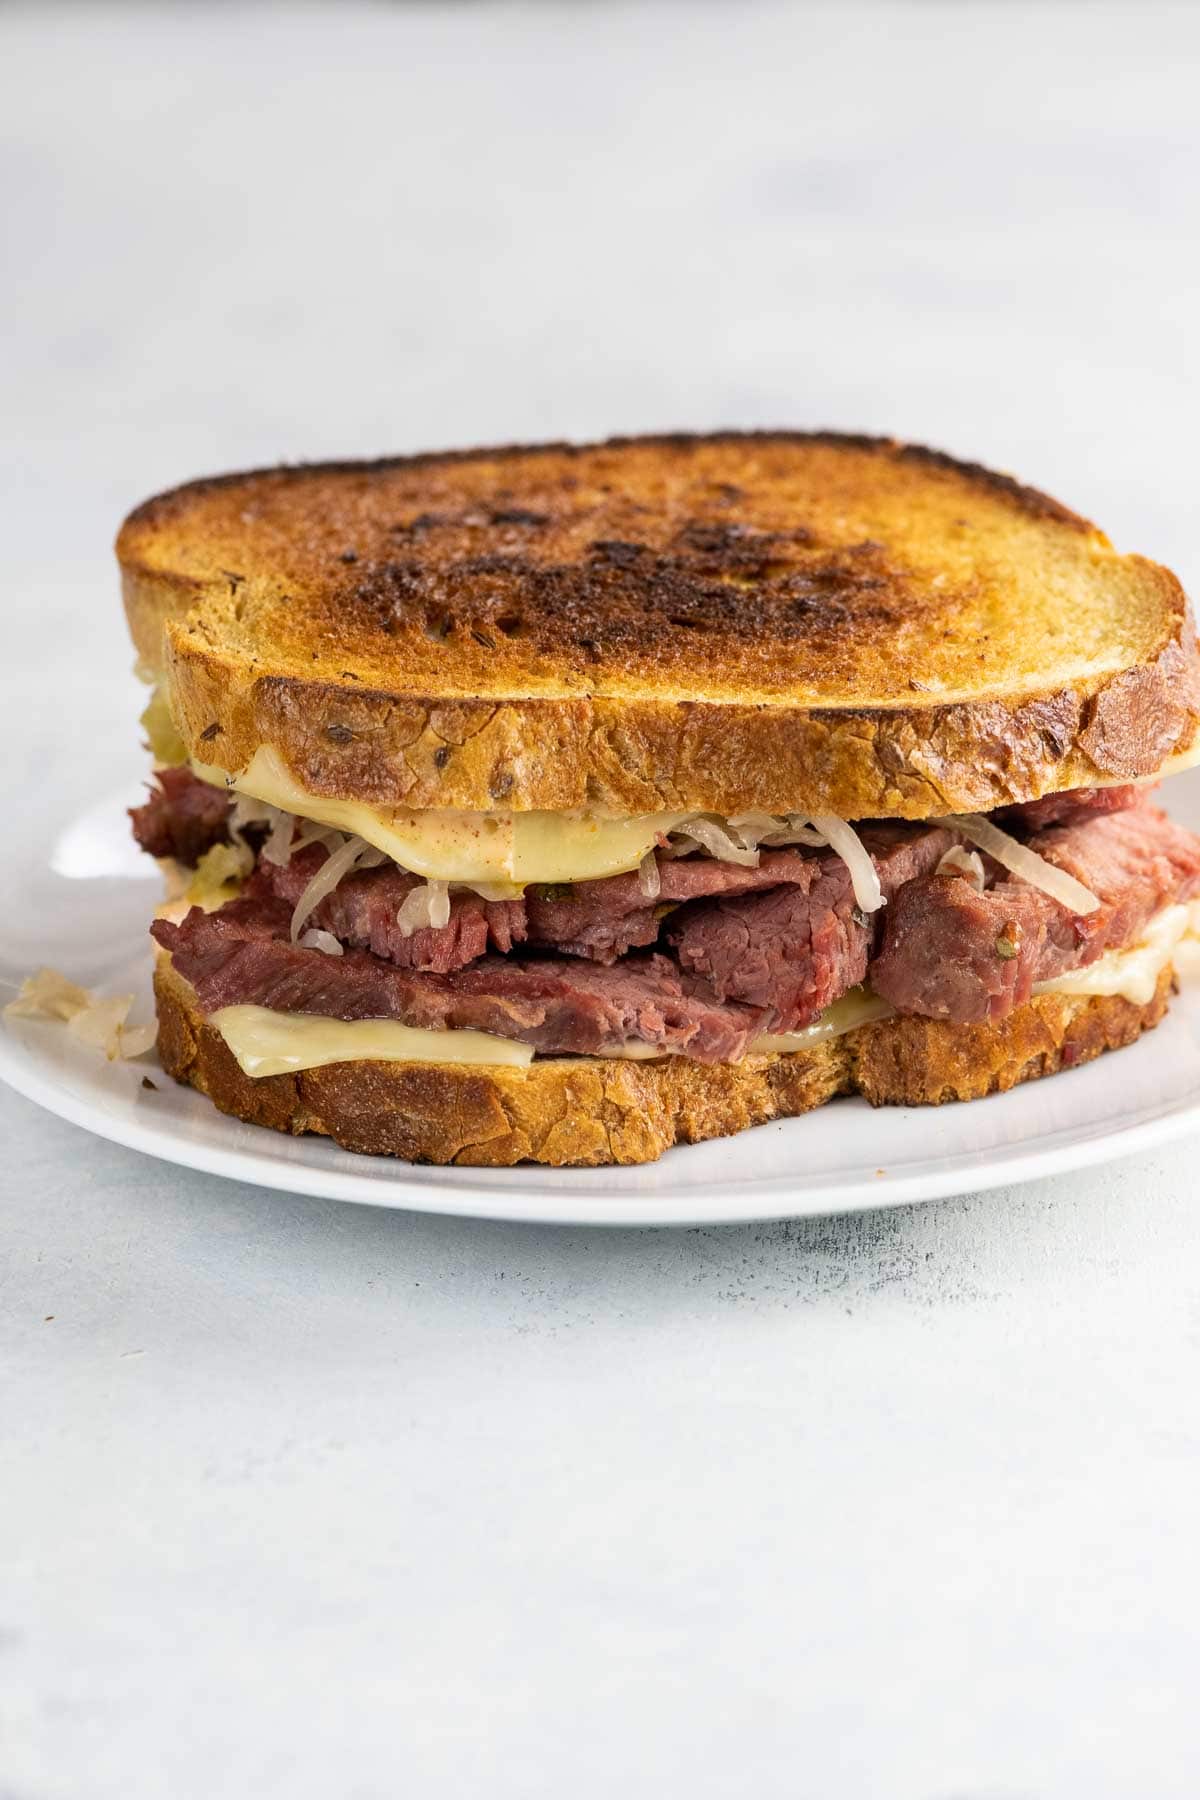 corned beef on rye (Reuben sandwich) on a white plate